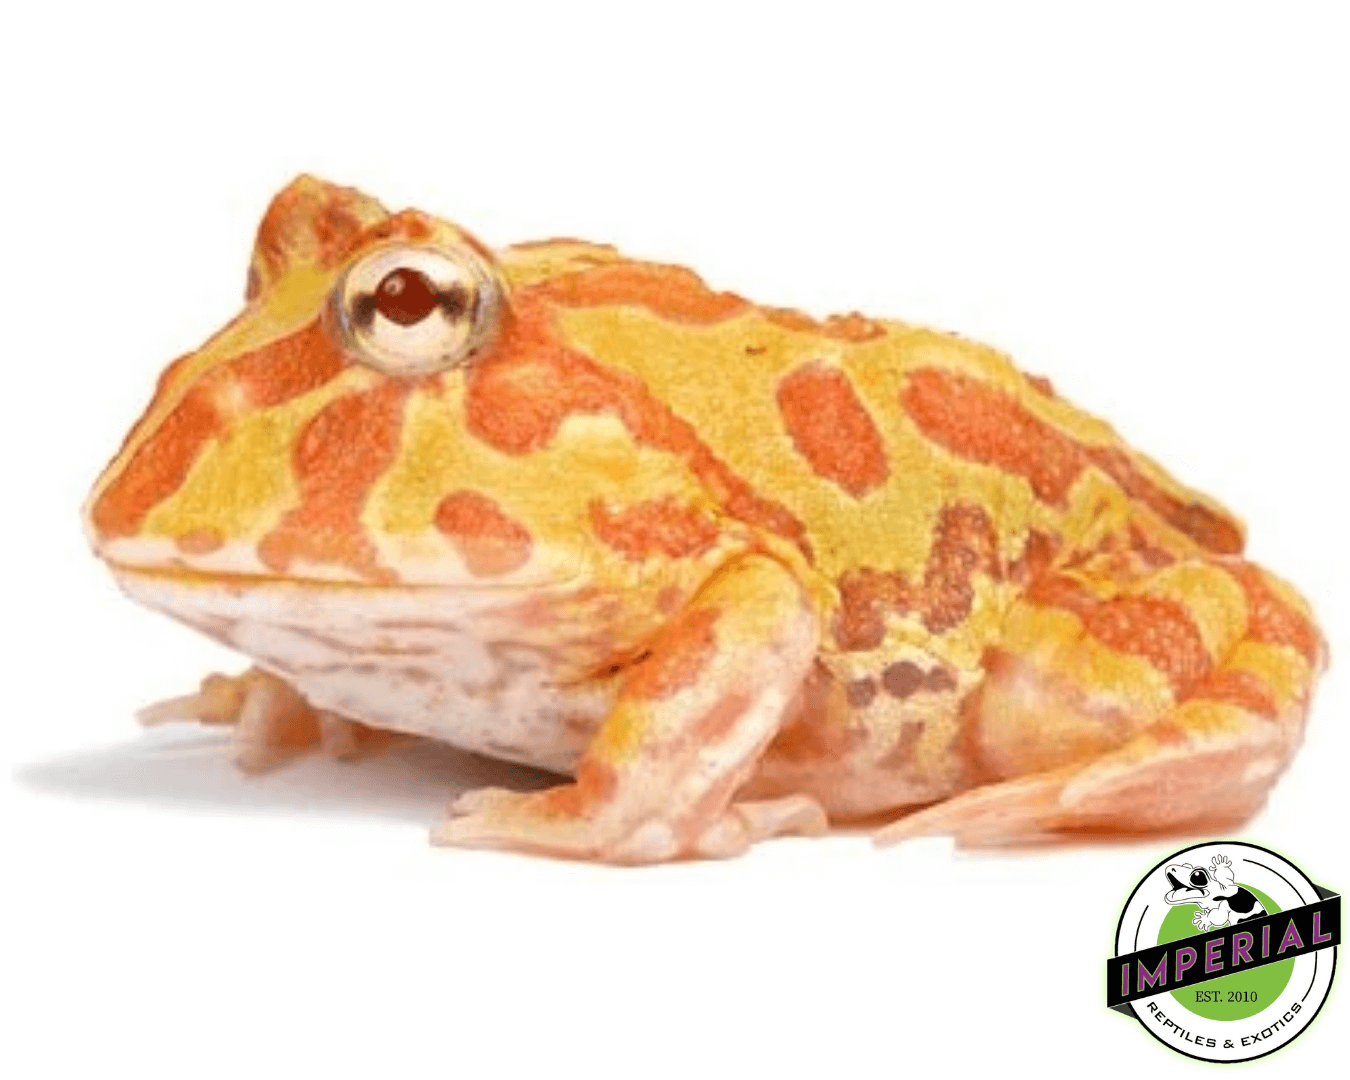 Albino pacman frog for sale, buy amphibians online